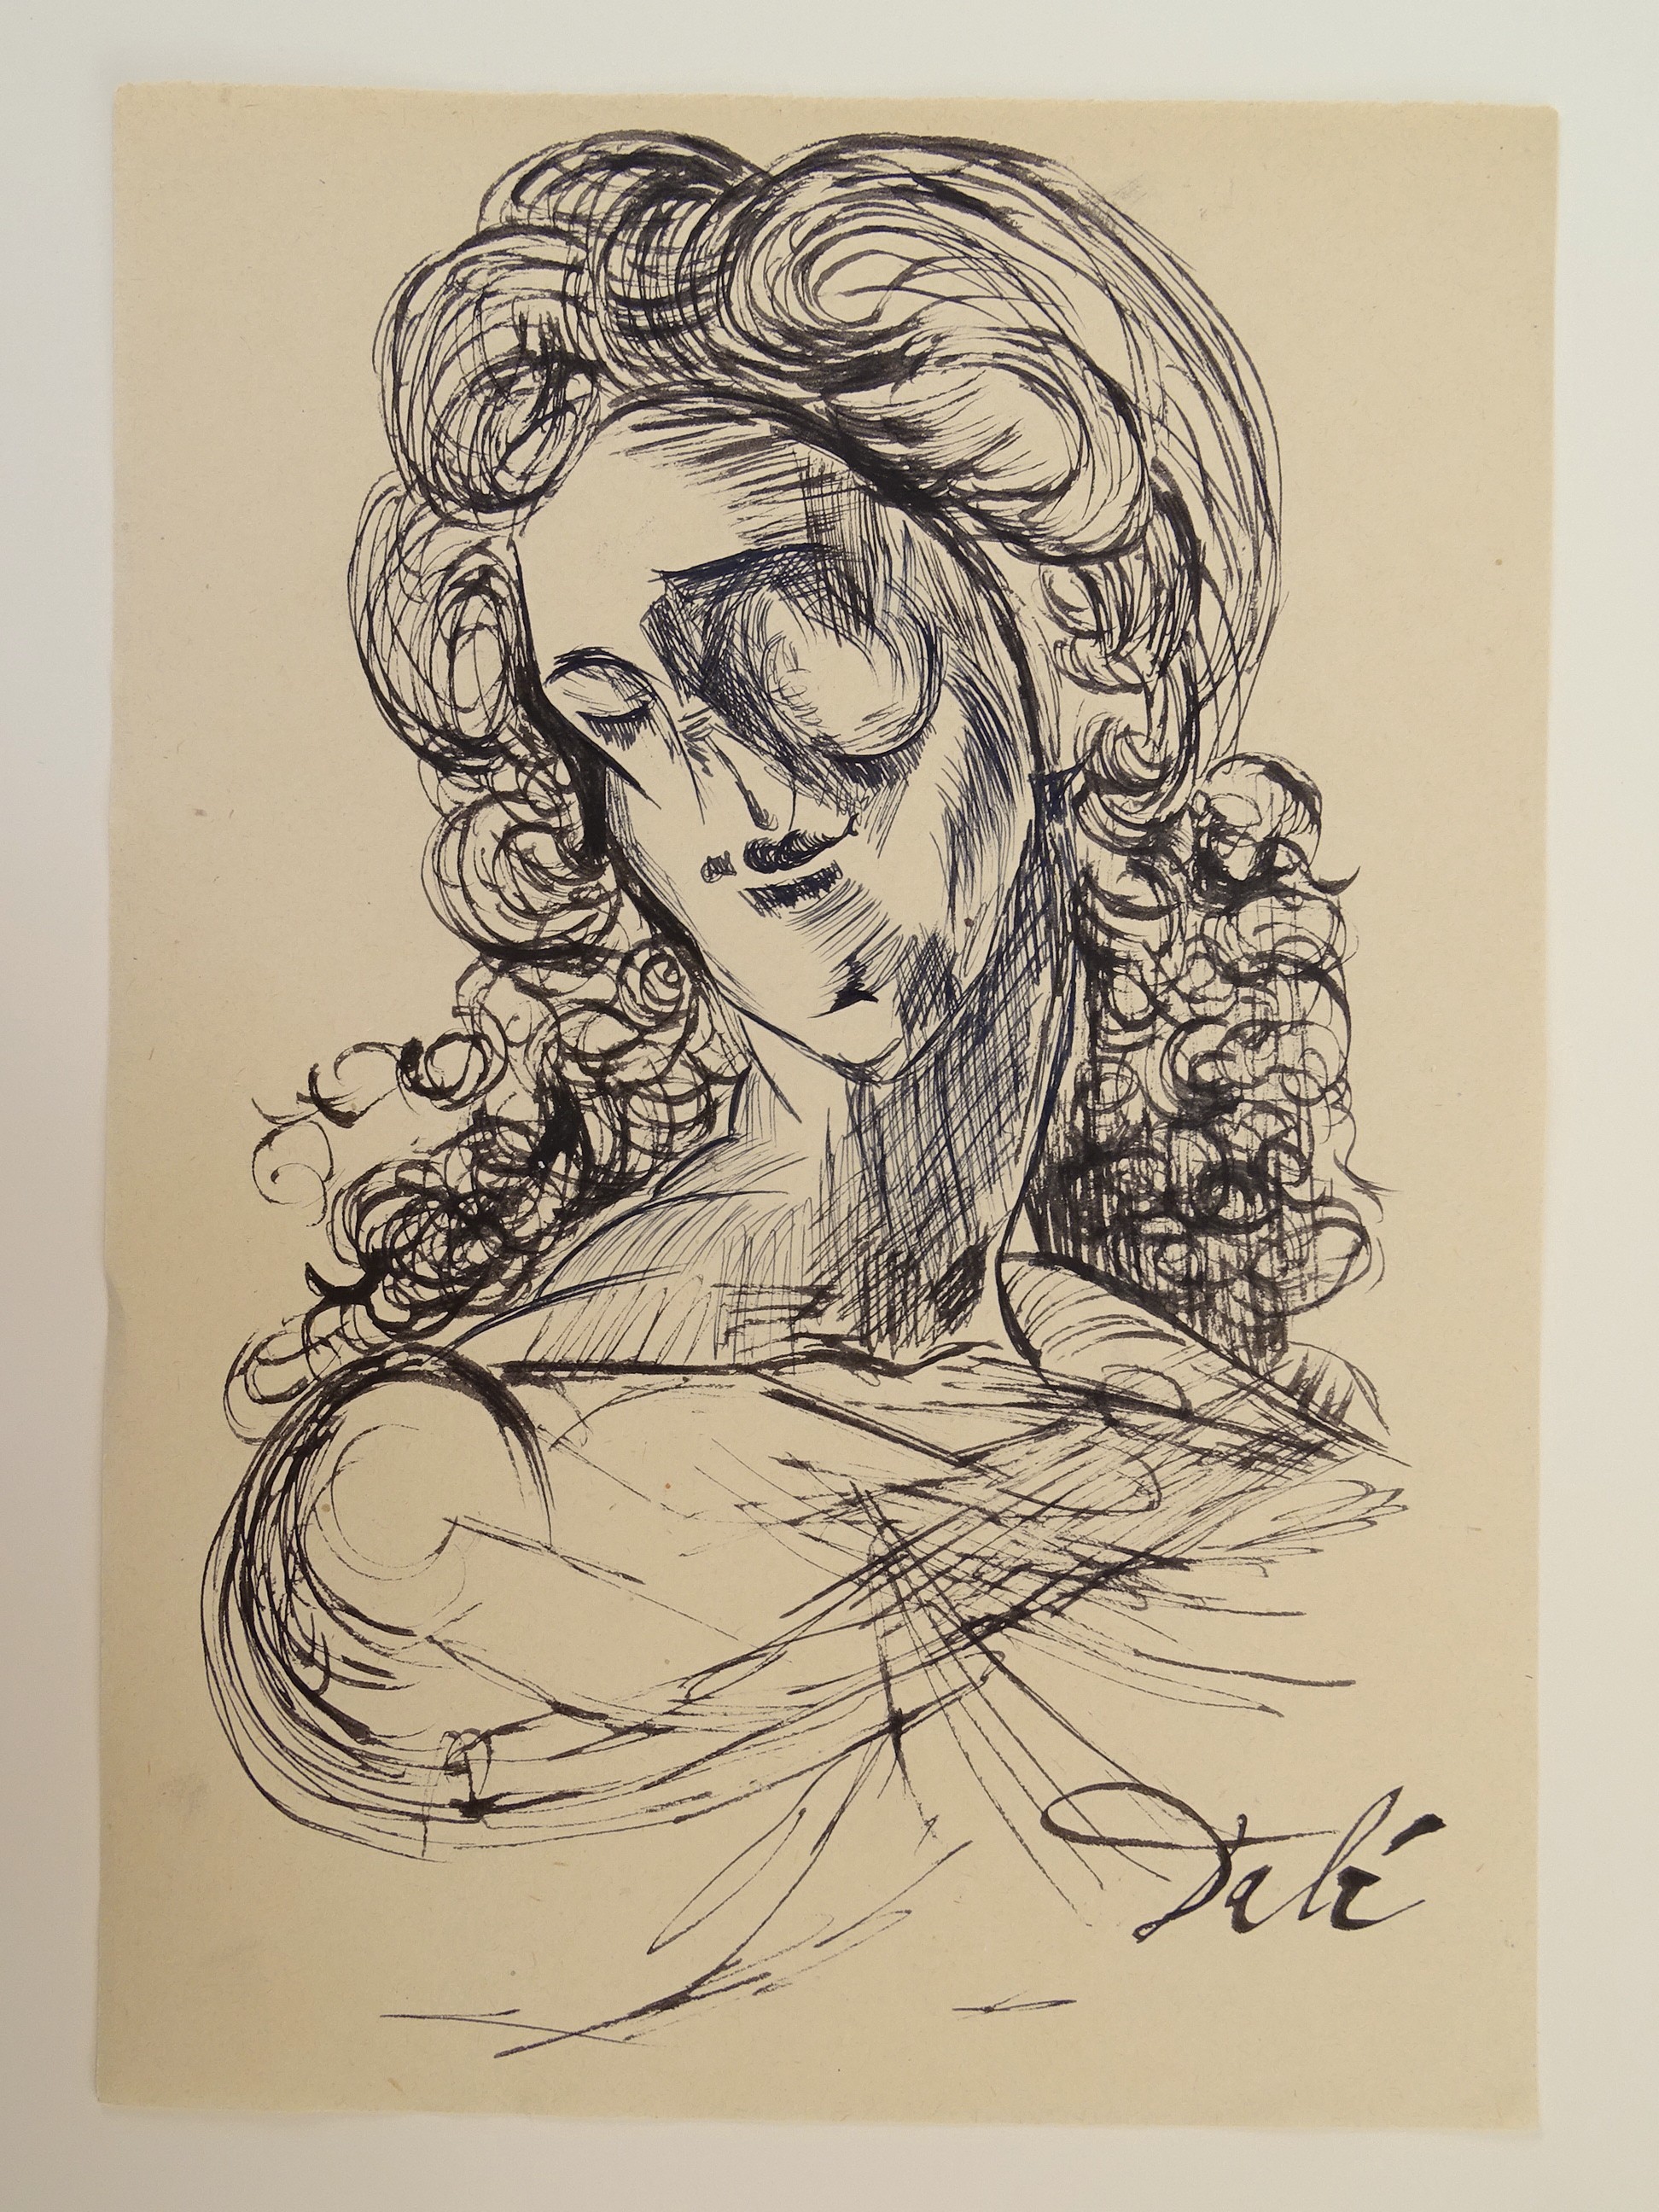 Sold at Auction: Salvador Dalí, Salvador Dali . drawing on old paper